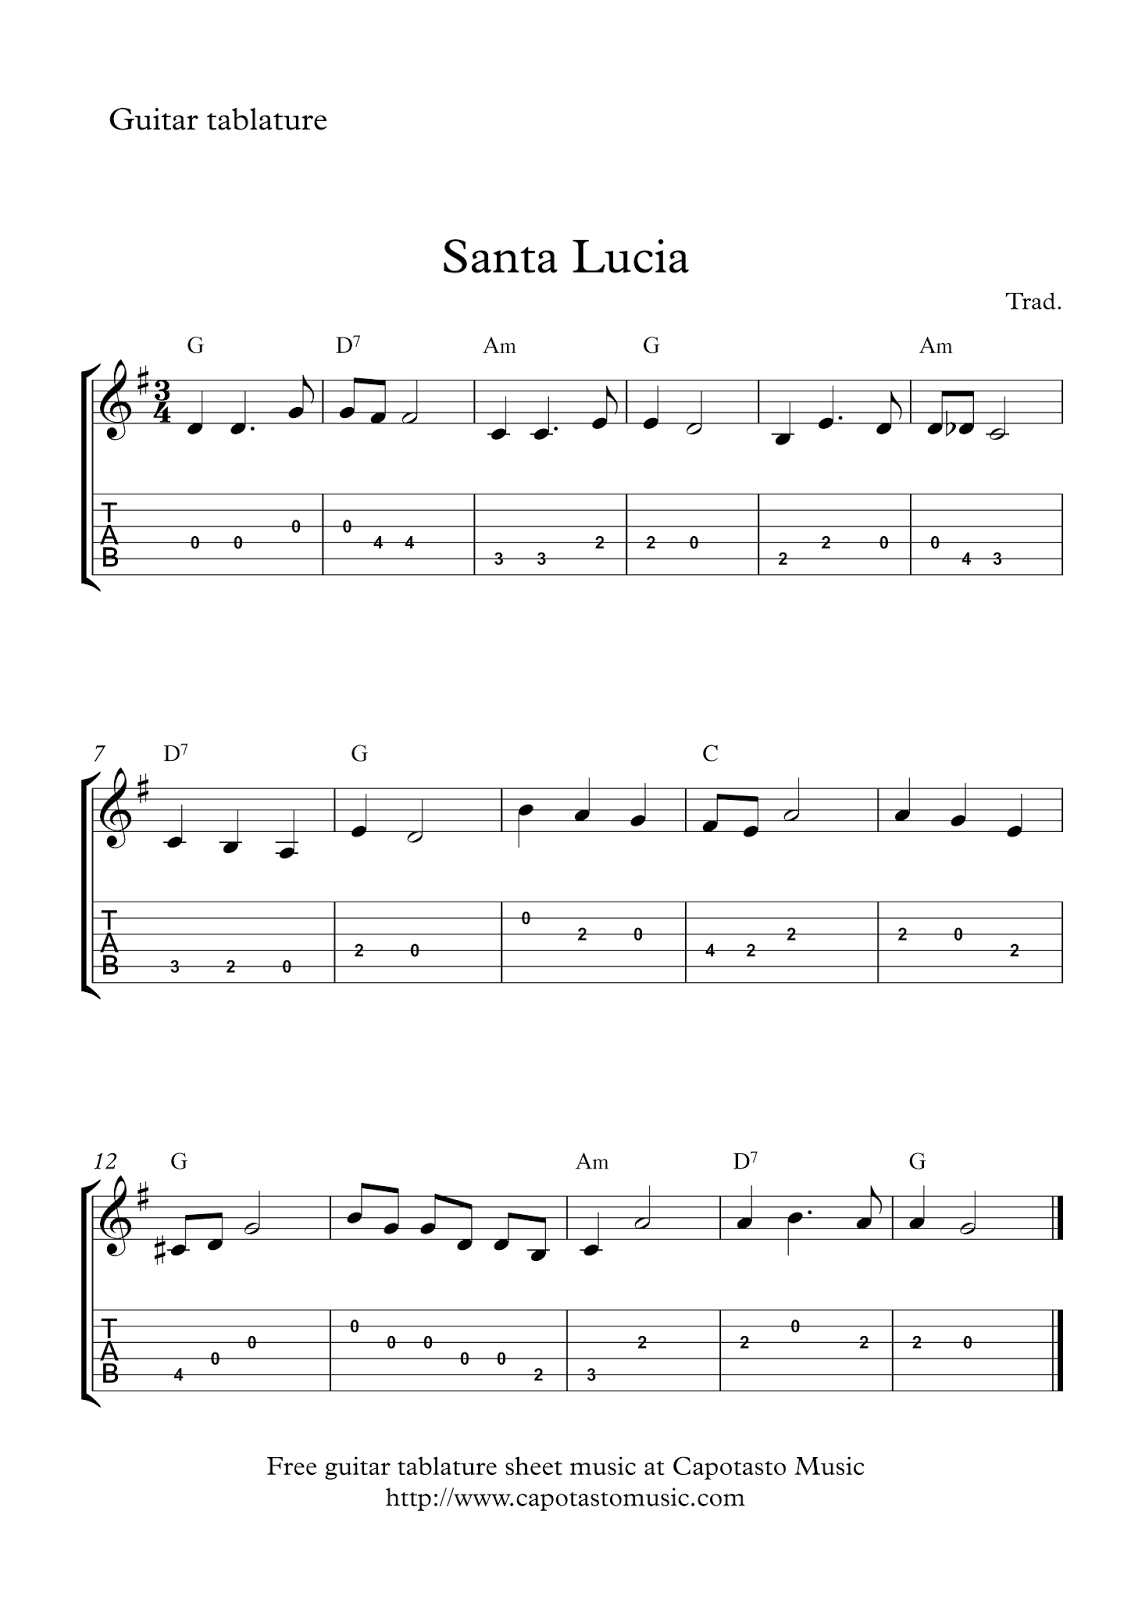 Santa lucia music free